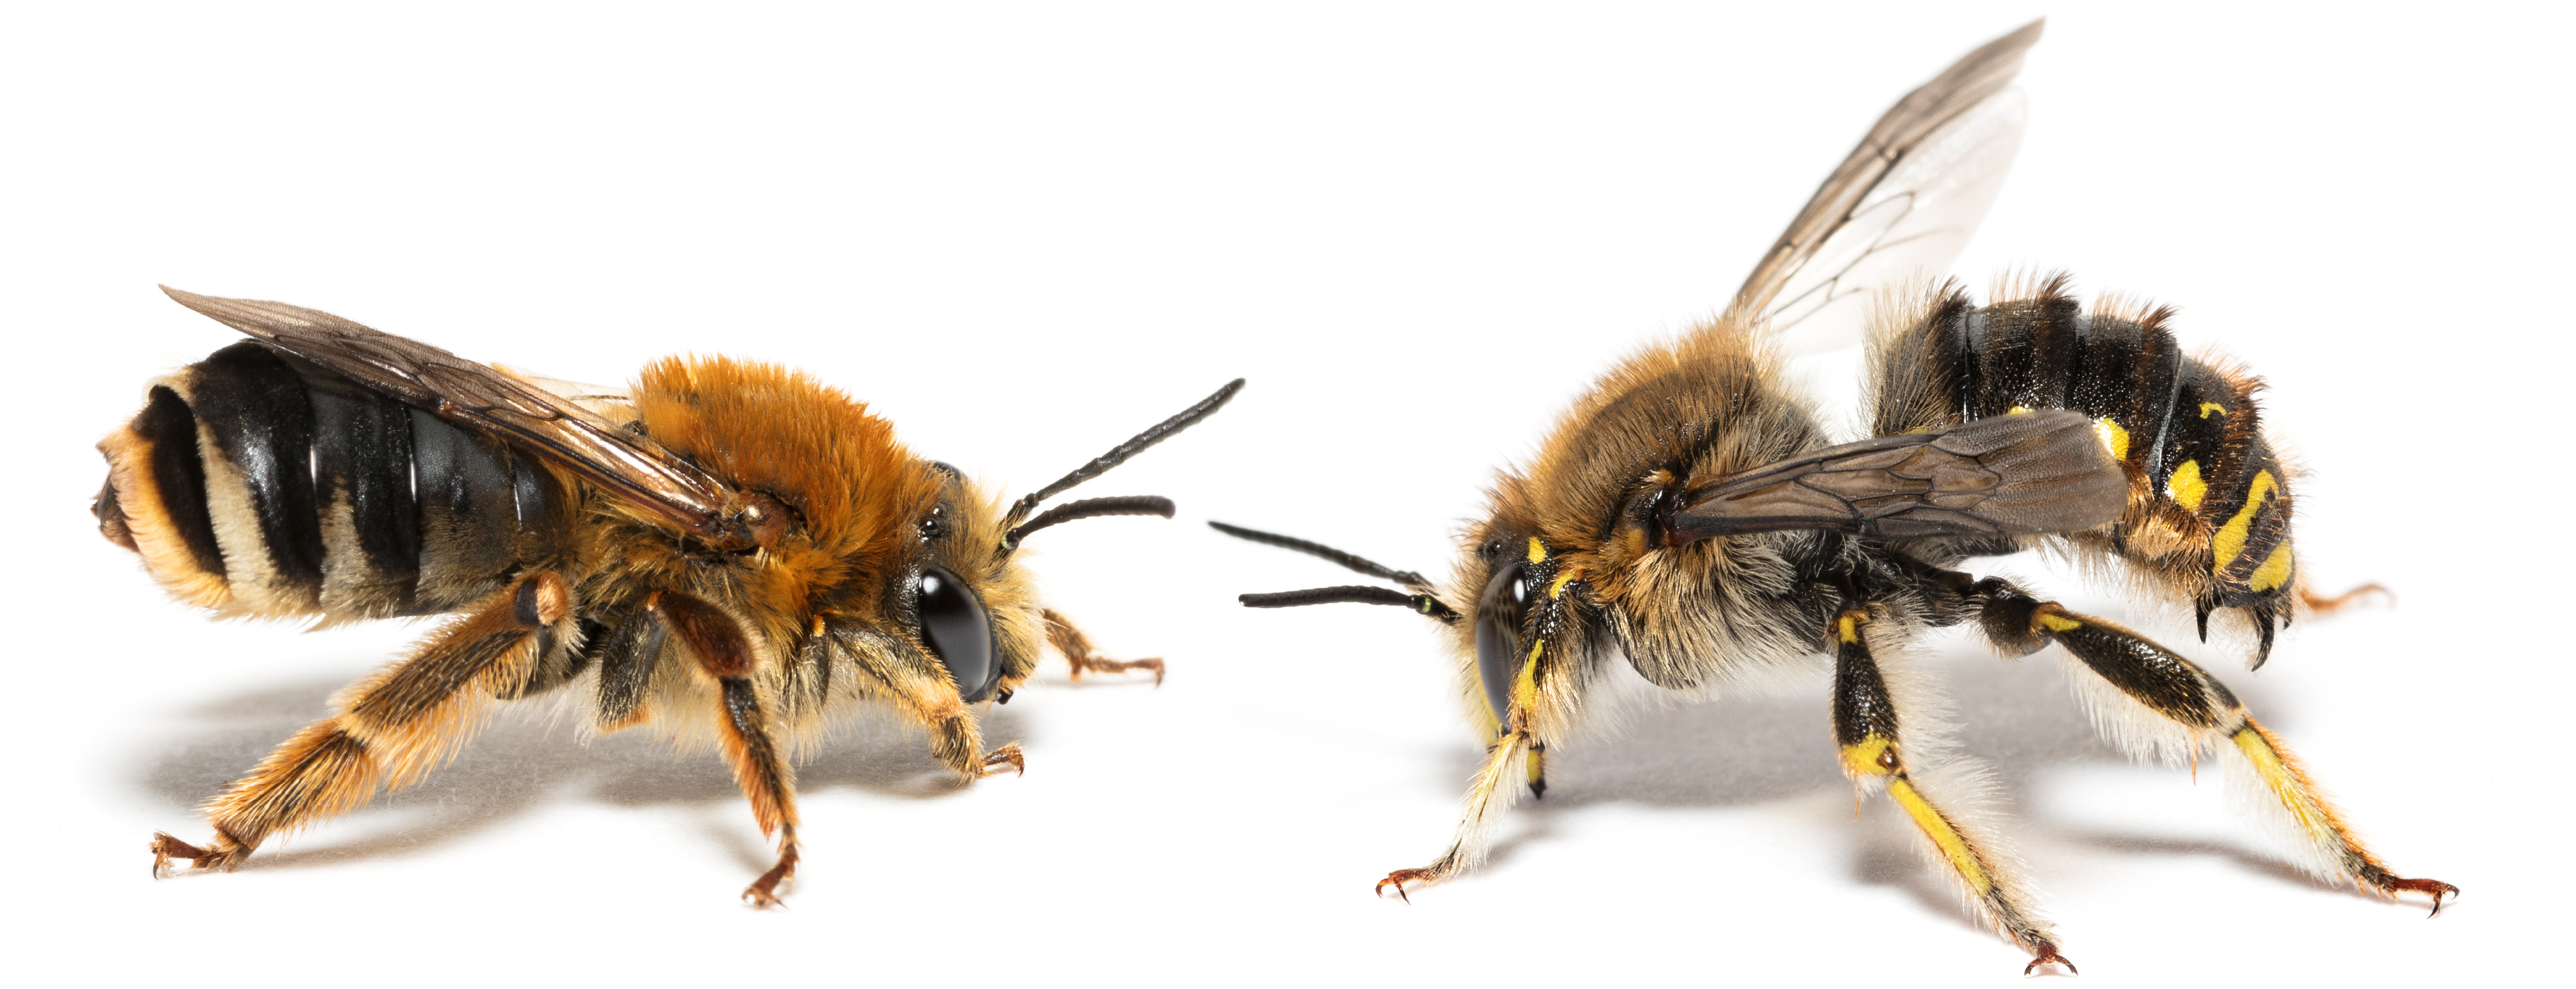 100 vilde bier på ny | NATURBESKYTTELSE.DK